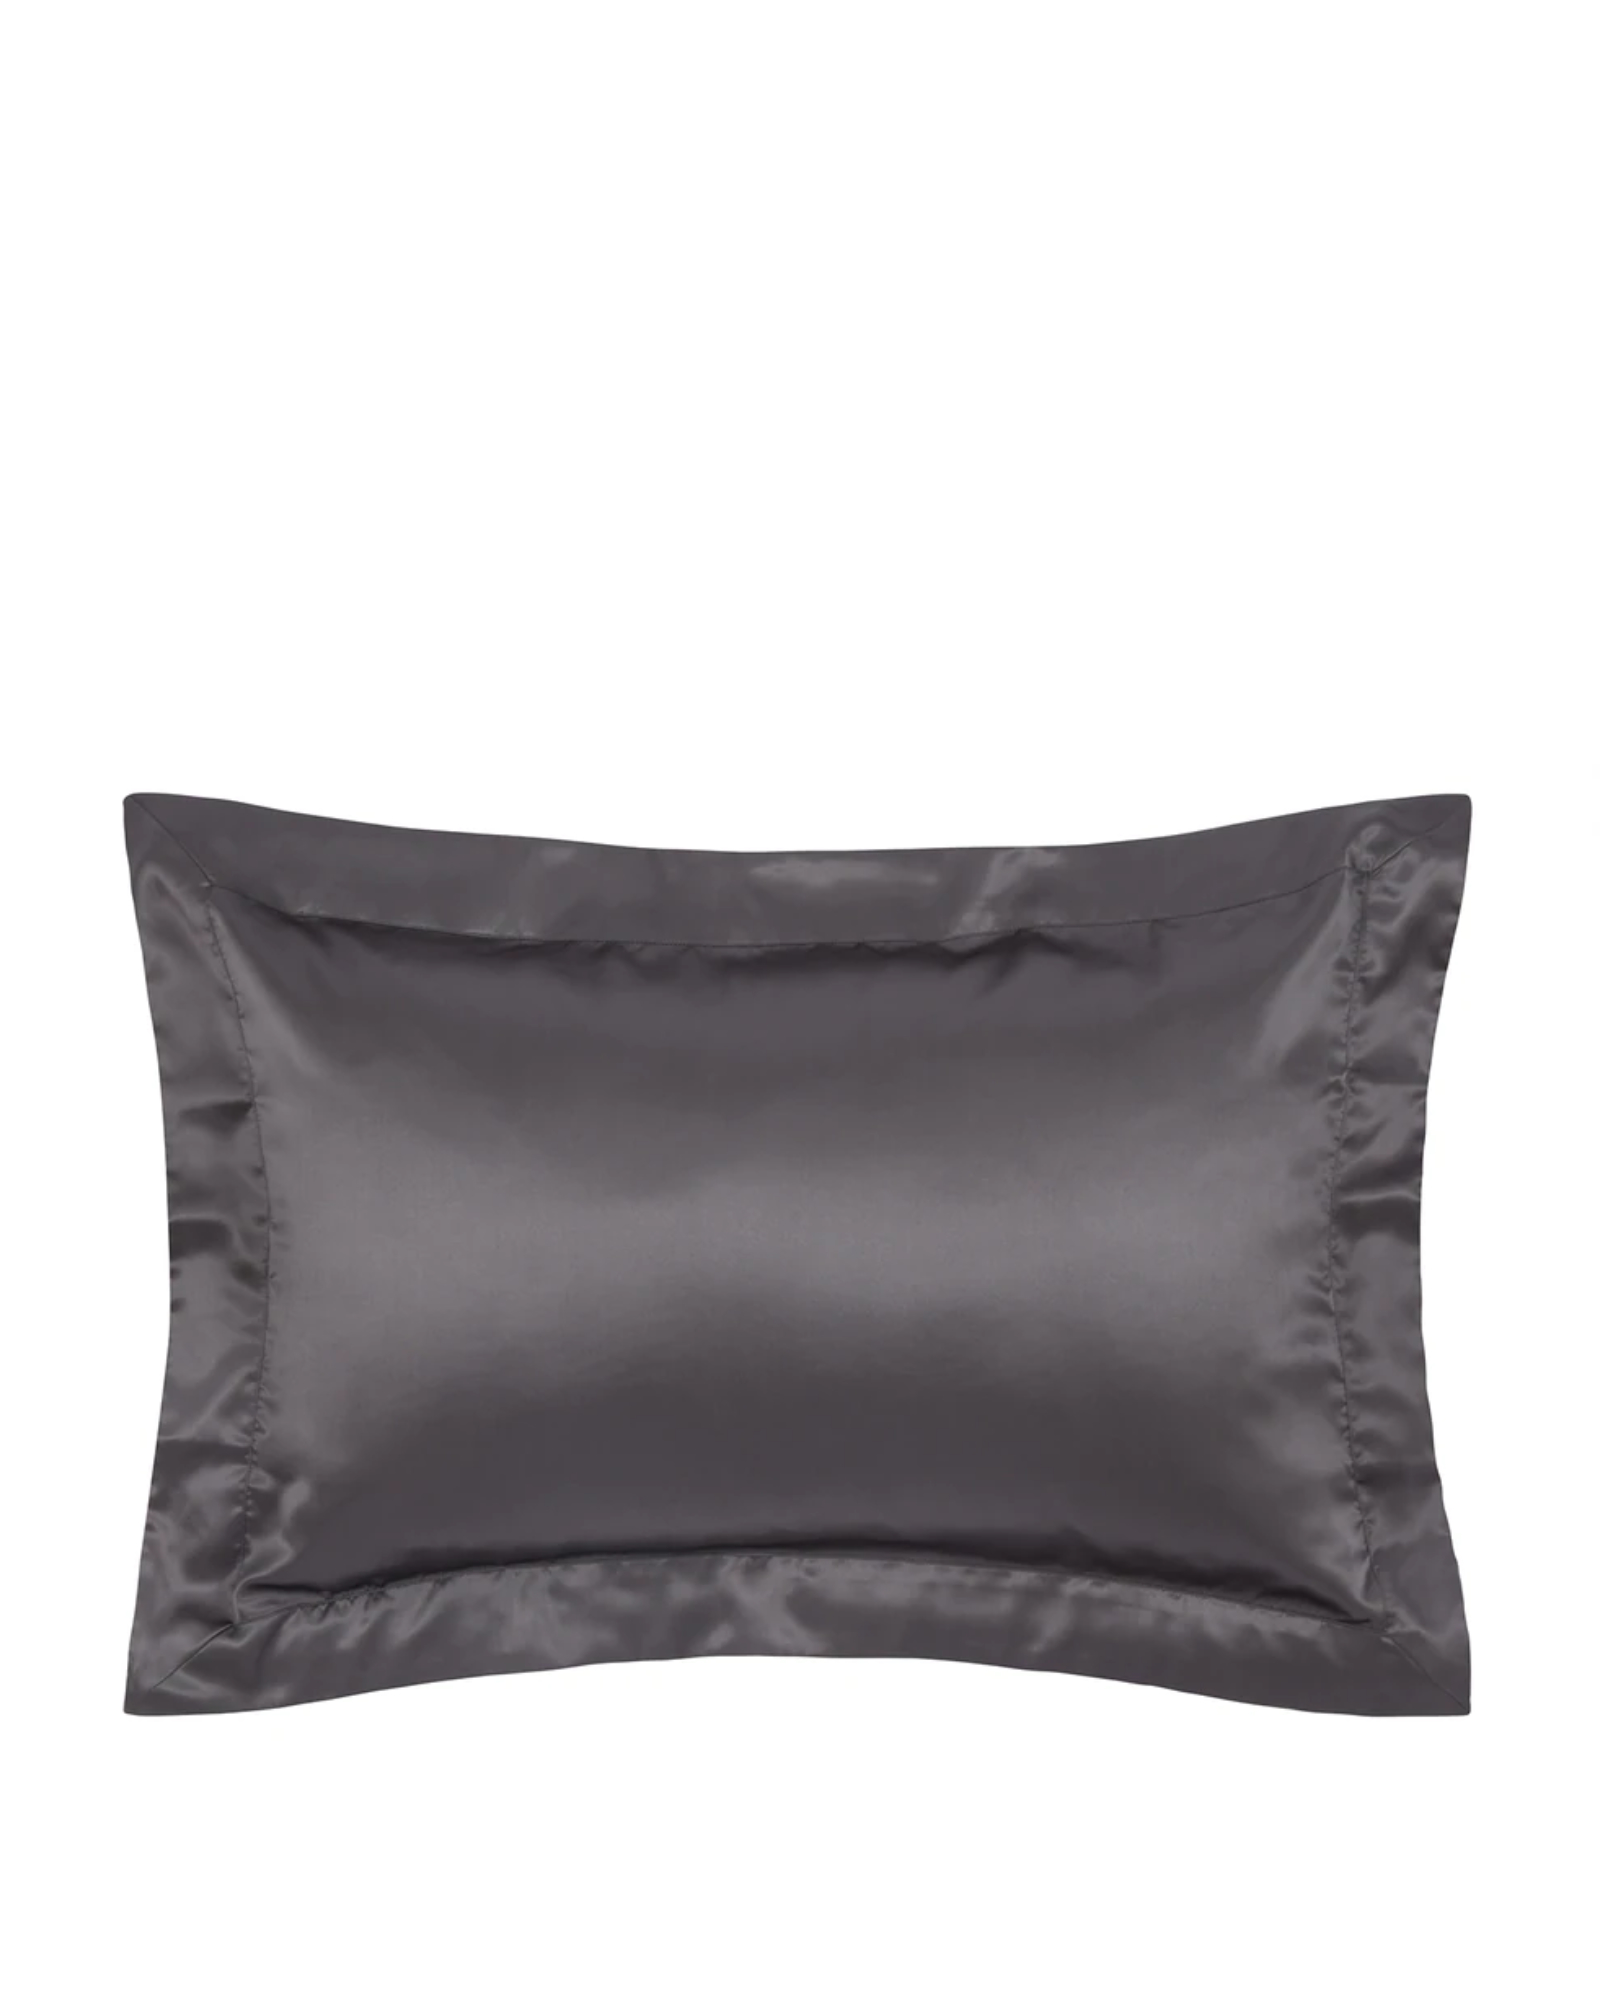 Gingerlily - Pillowcase SILK charcoal - 65x65 cm - charcoal